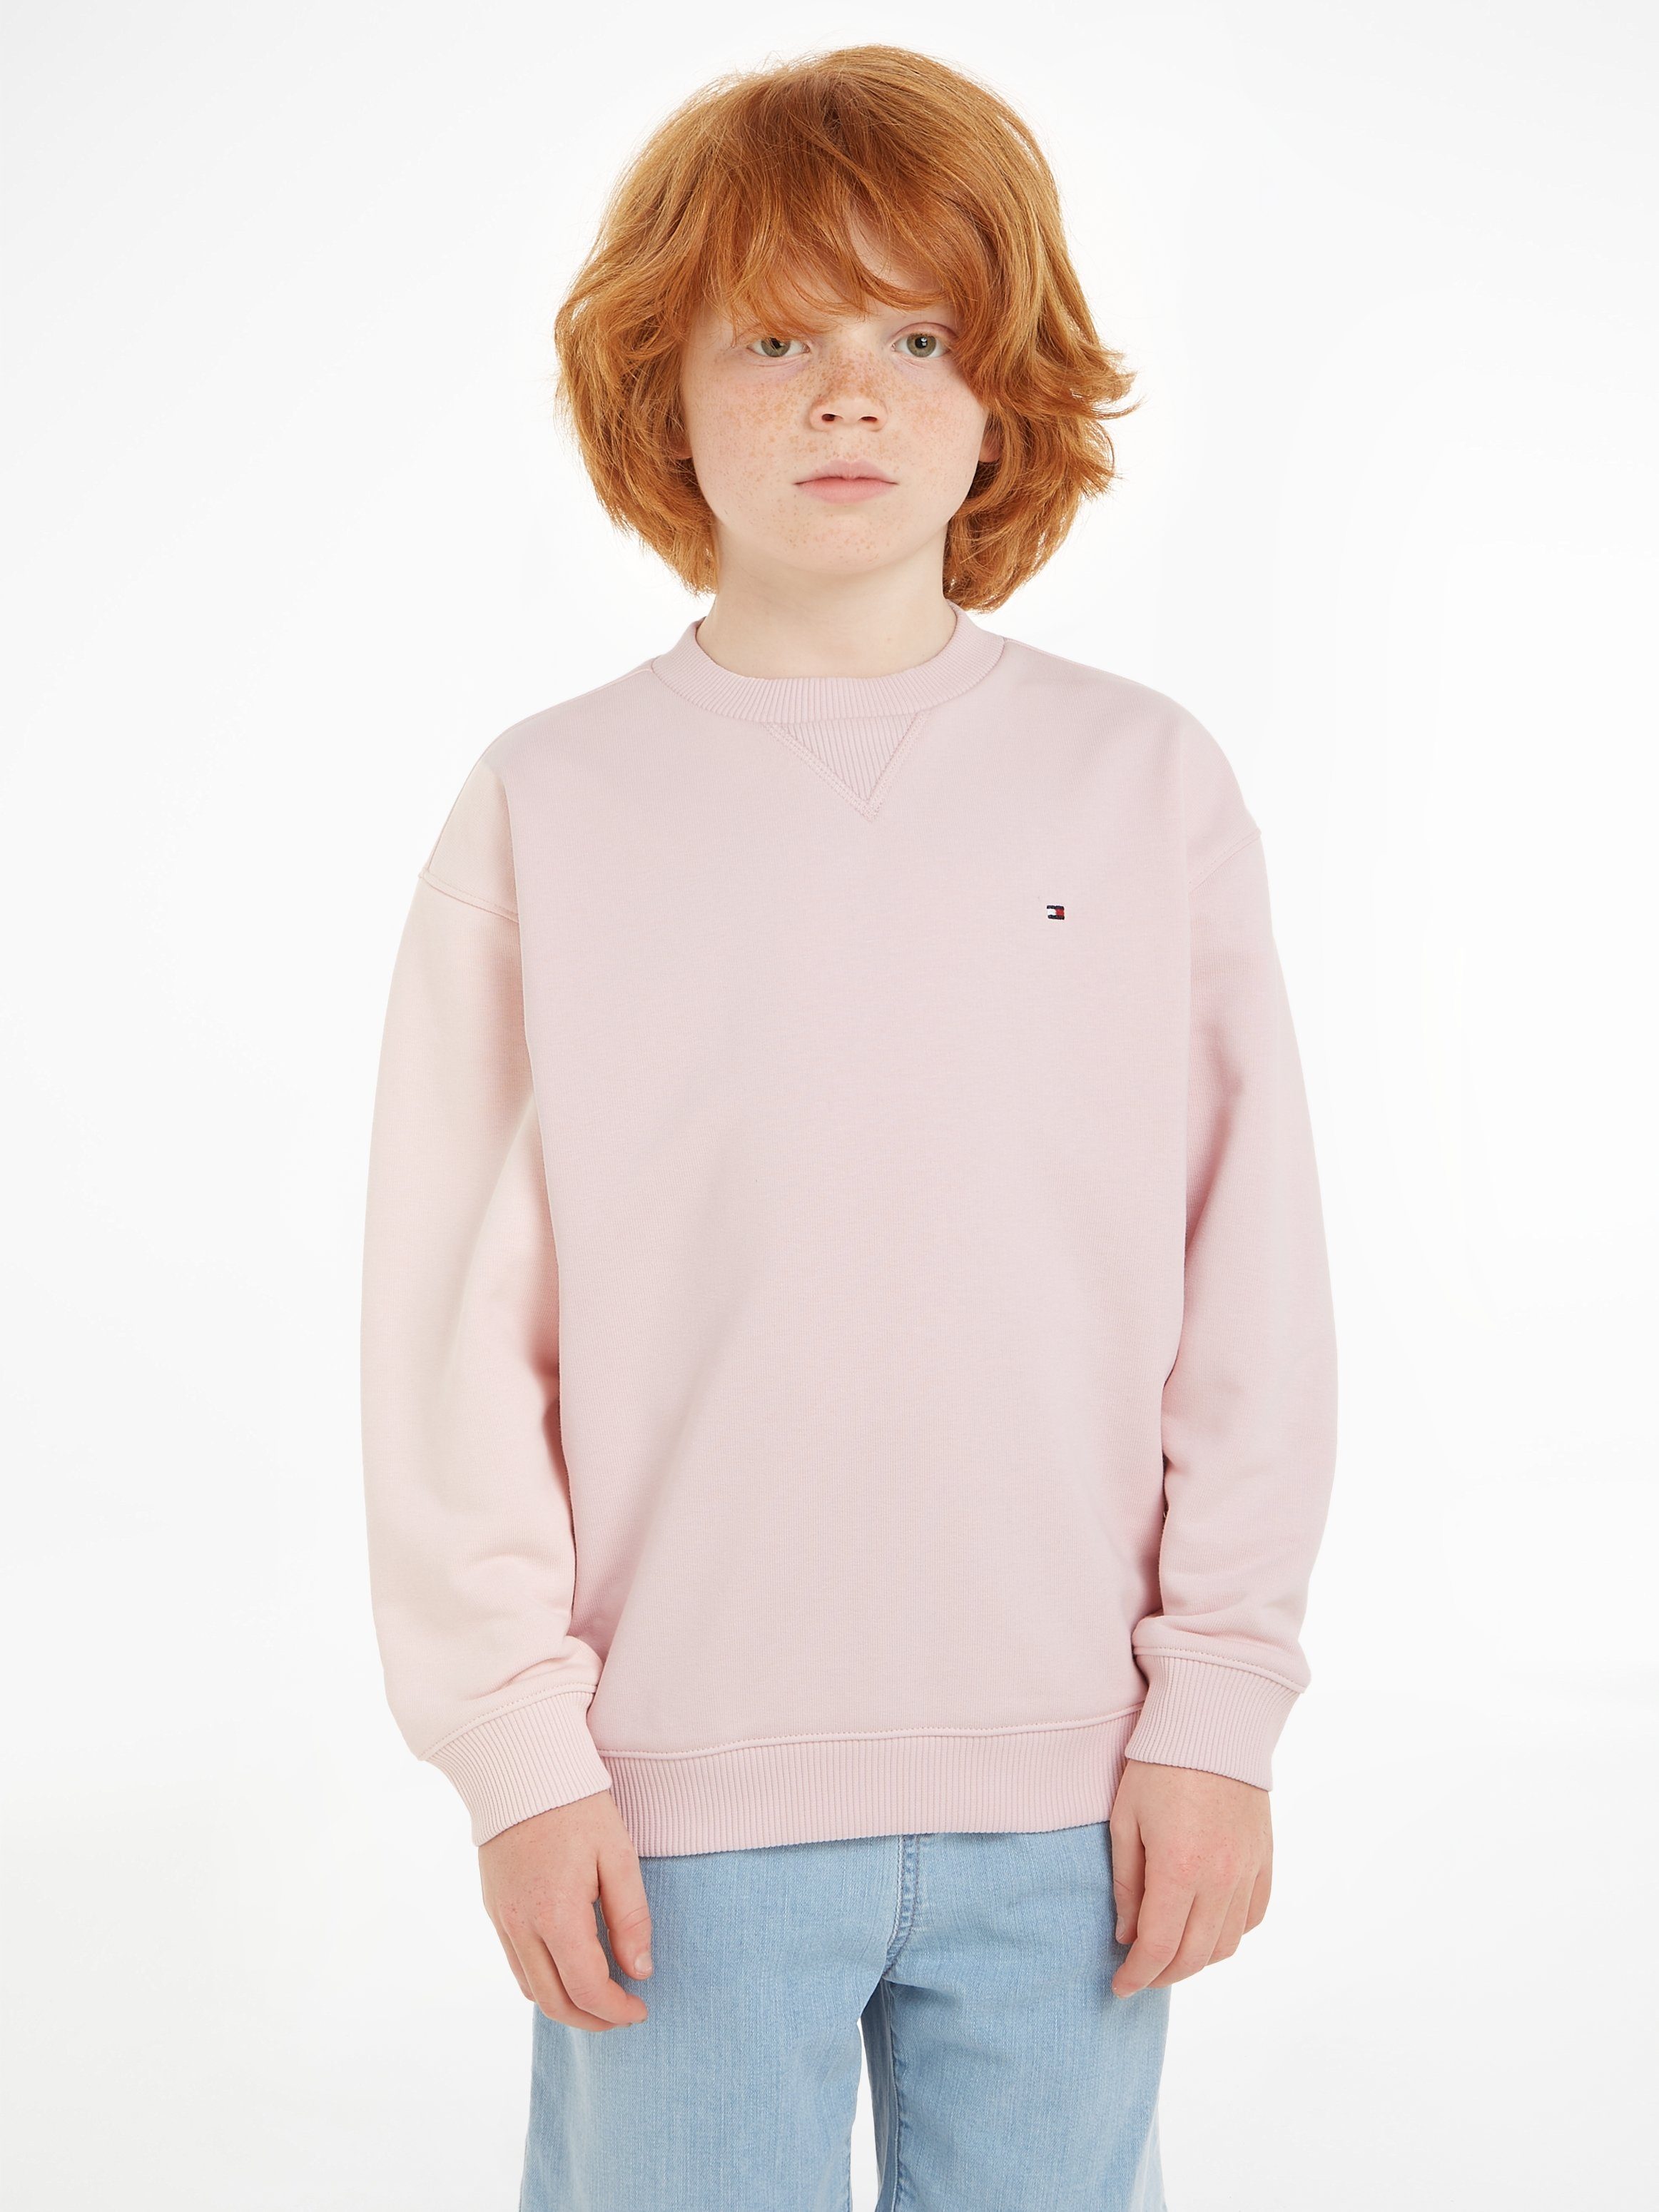 Tommy Hilfiger U TIMELESS in SWEATSHIRT Unifarbe Pink Sweatshirt Whimsy